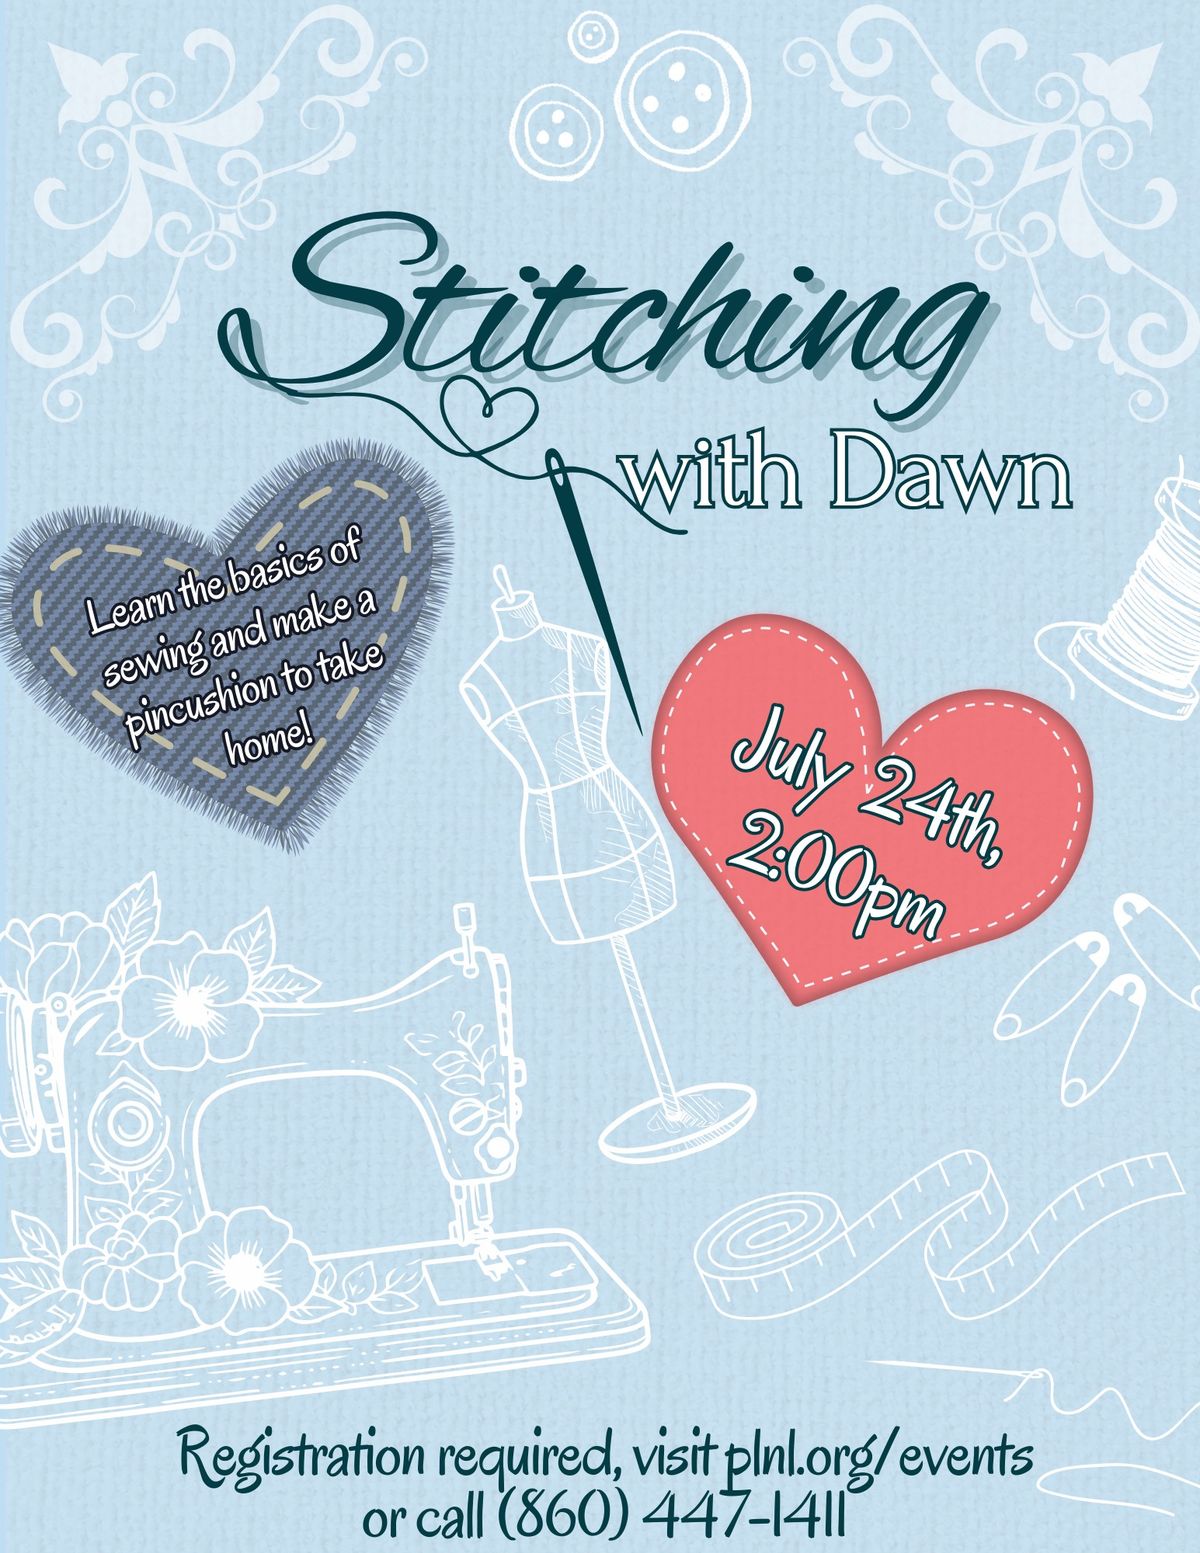 Stitching with Dawn